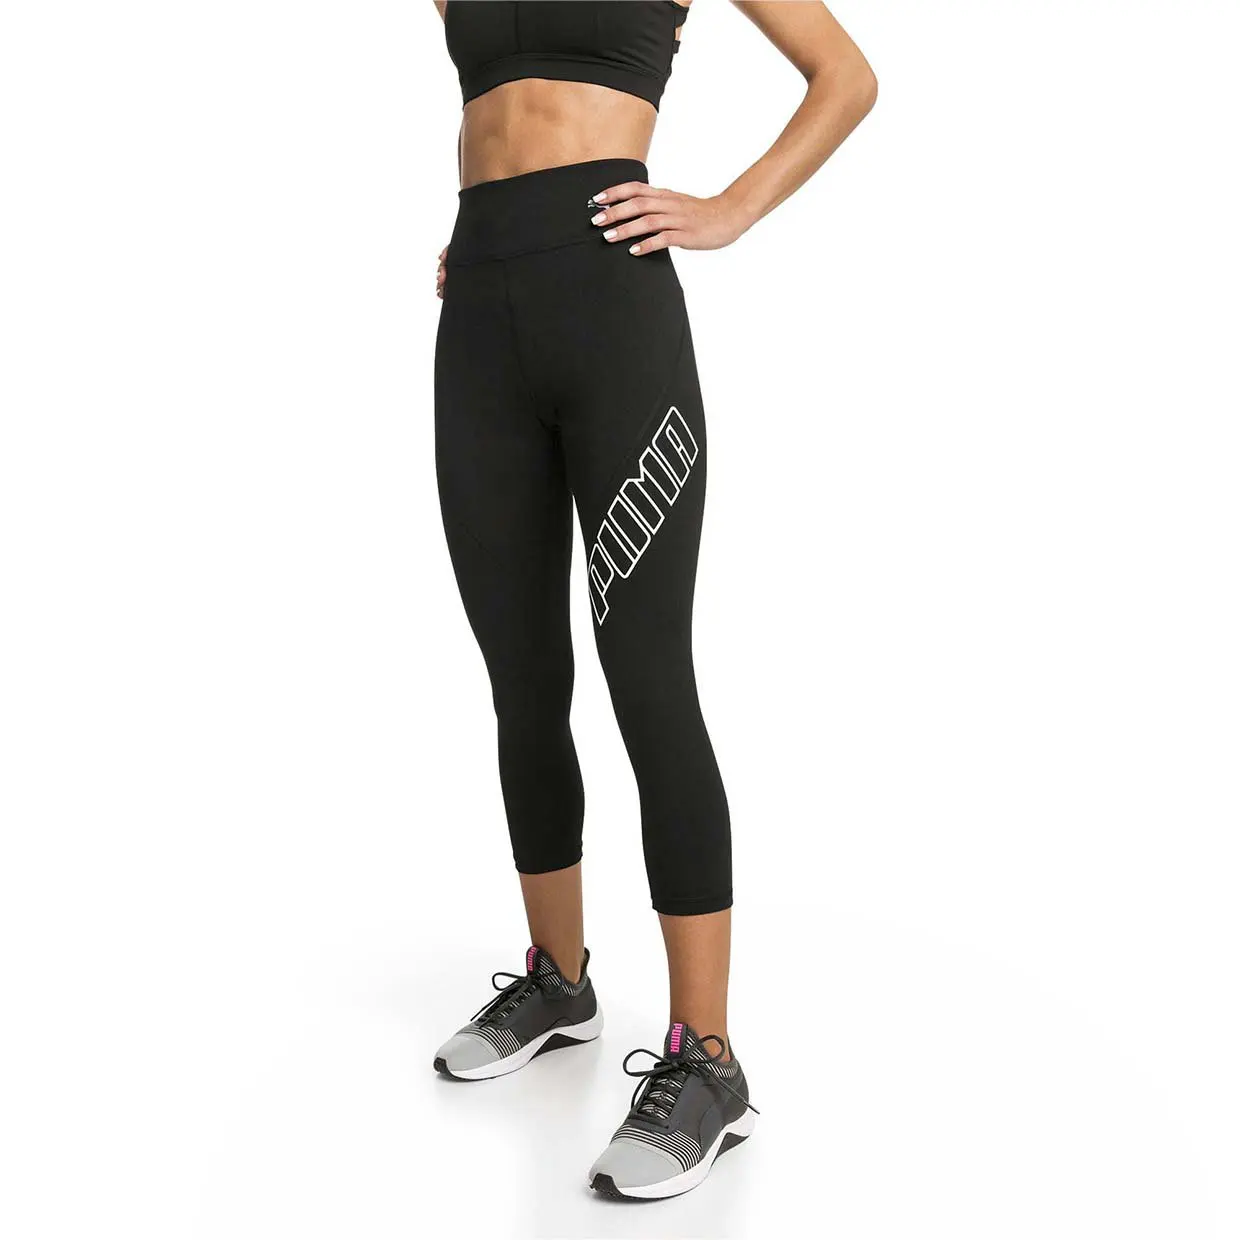 Puma-leggings logo yogini para mujer, calzado femenino, 51743004 - AliExpress Deportes y entretenimiento